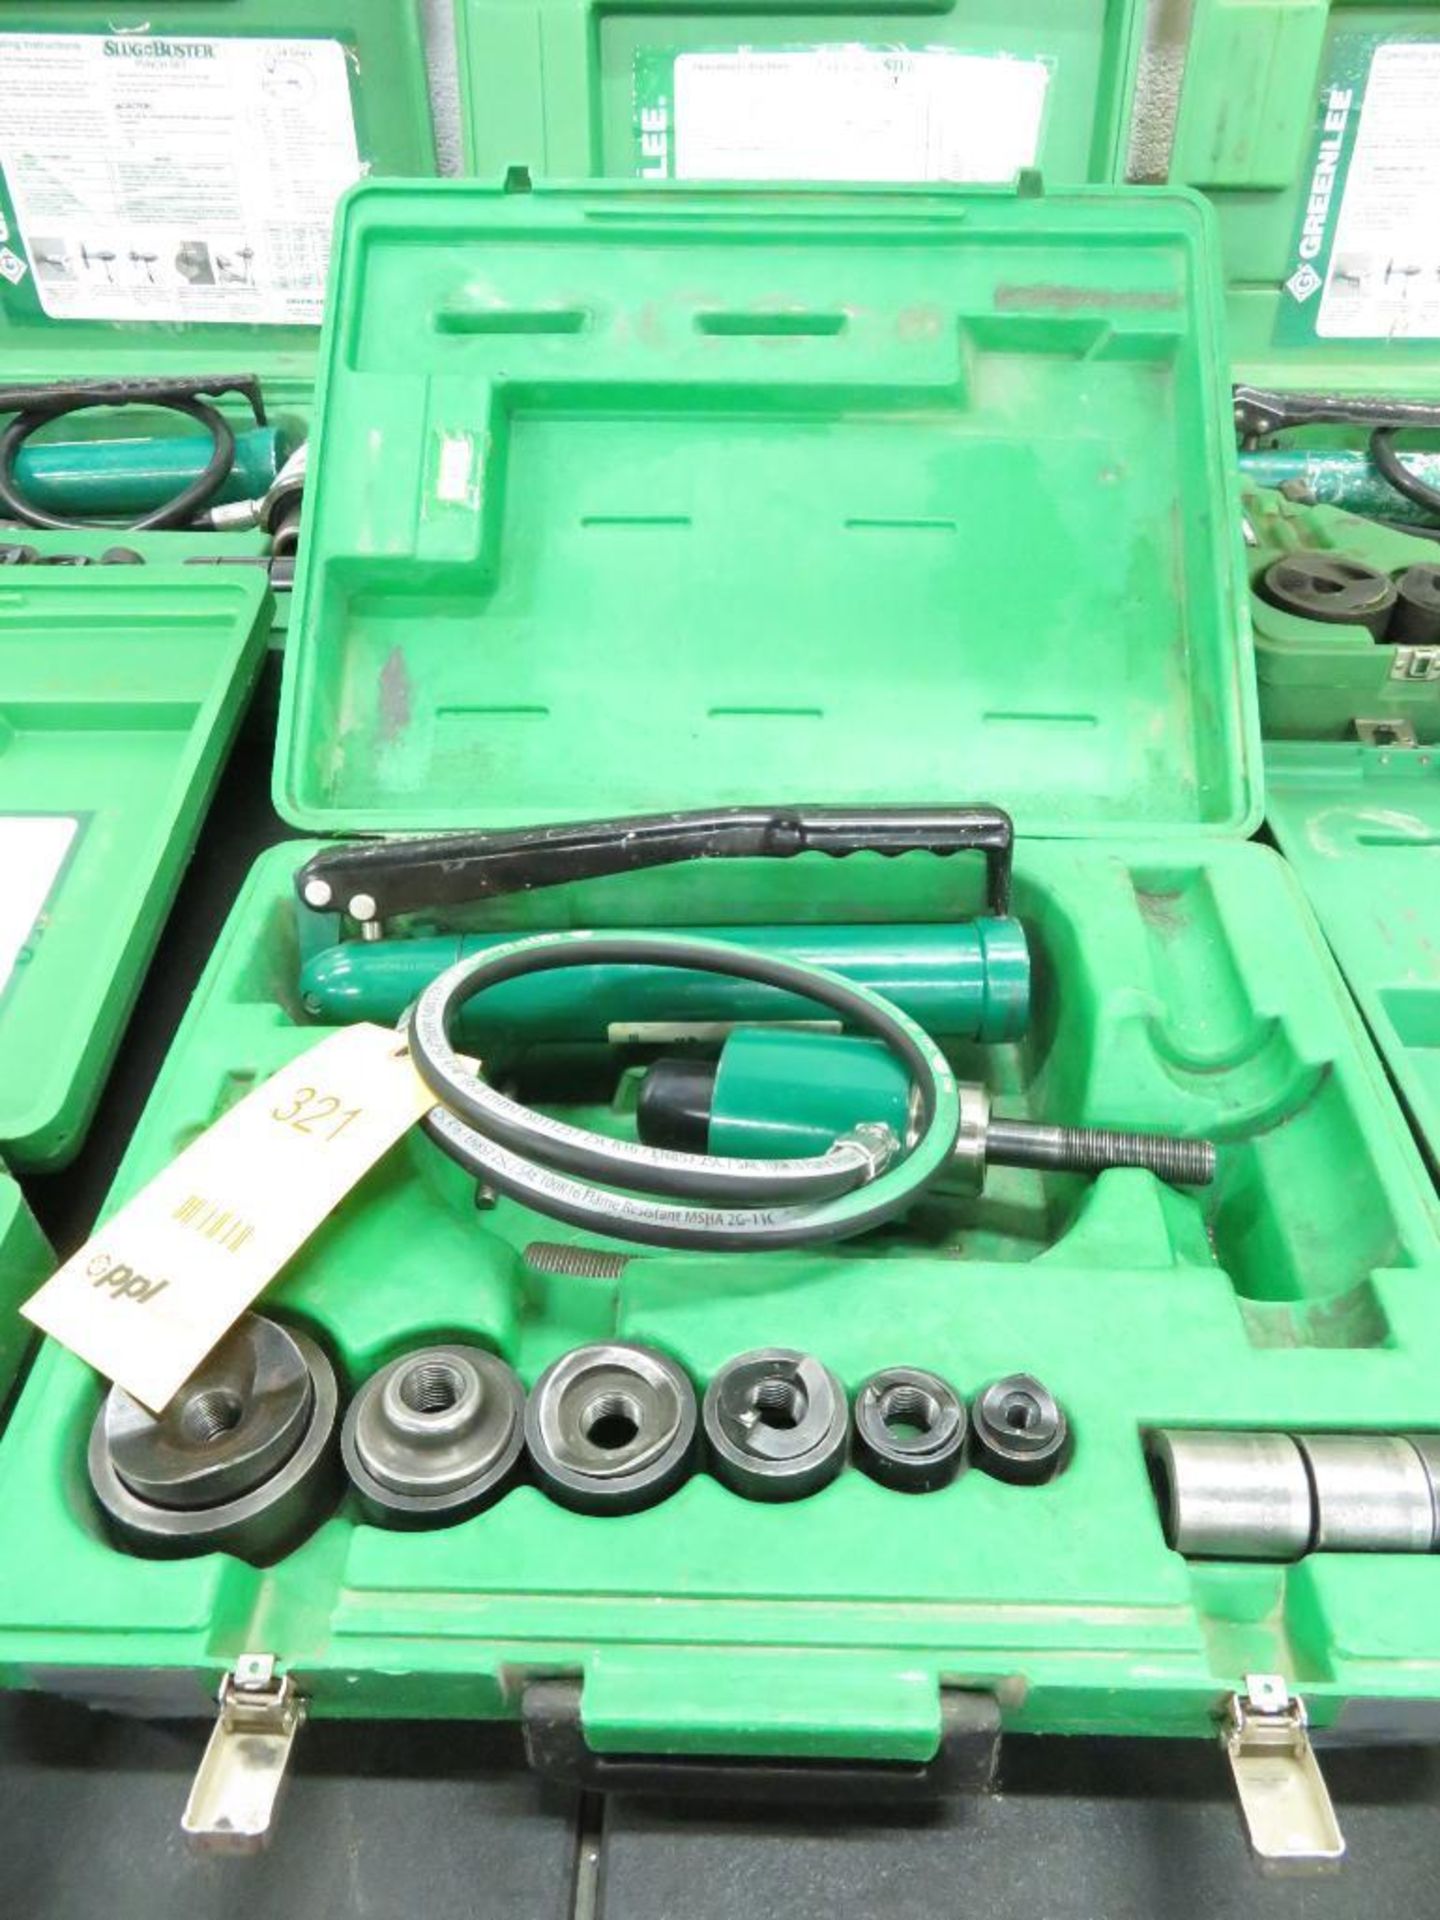 LOT: Greenlee No. 767 Slug Buster Hydraulic Punch Set, with Manual Pump, Assorted Dies, Case